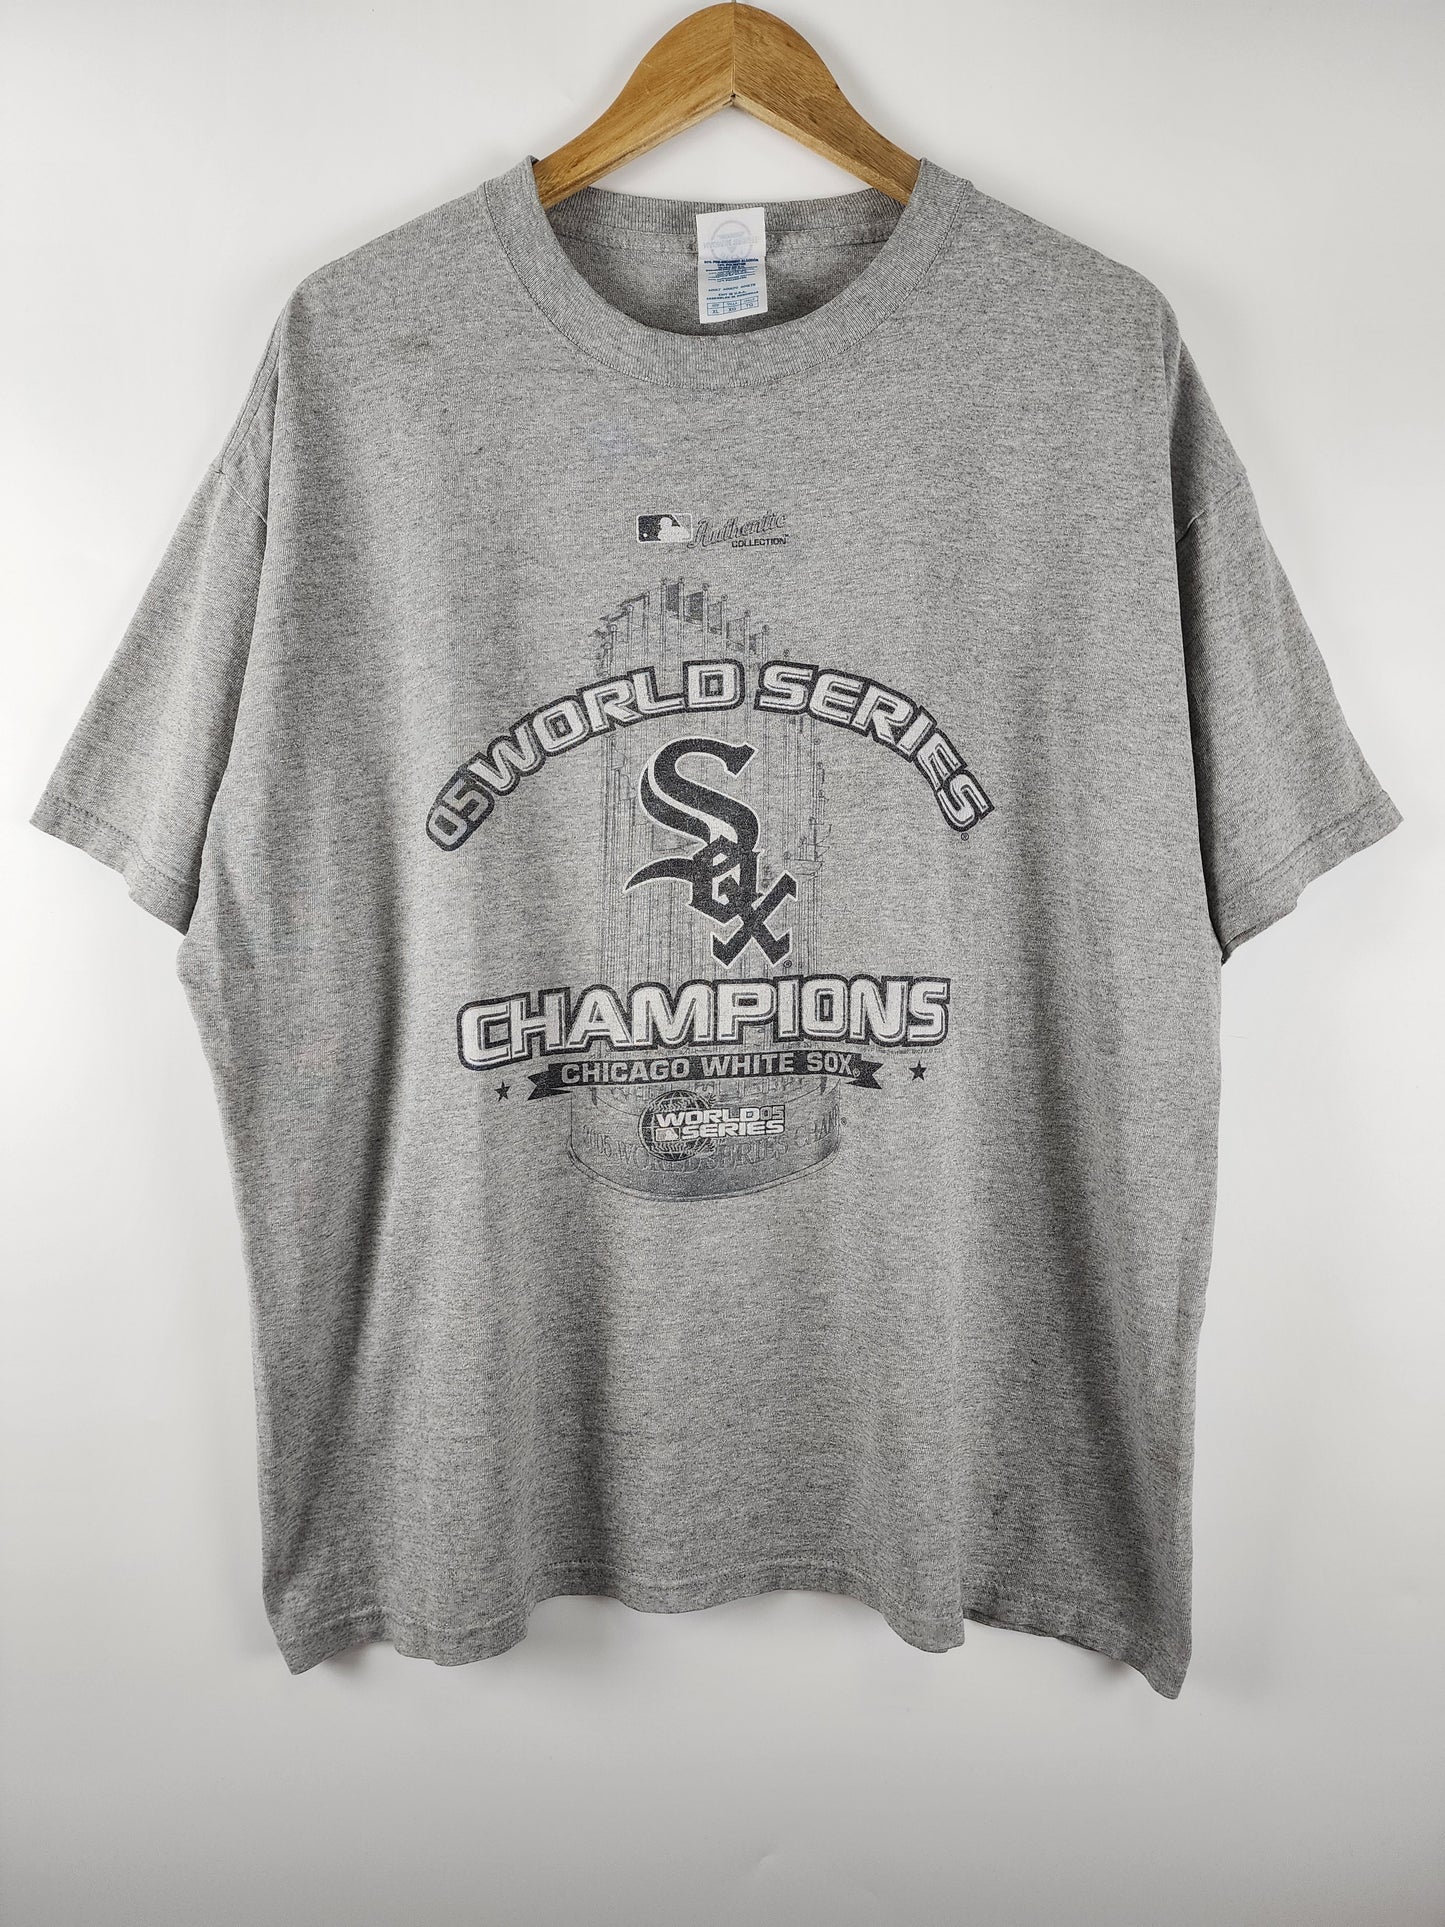 Vintage Chicago White Sox 2005 MLB Champion team T-shirt